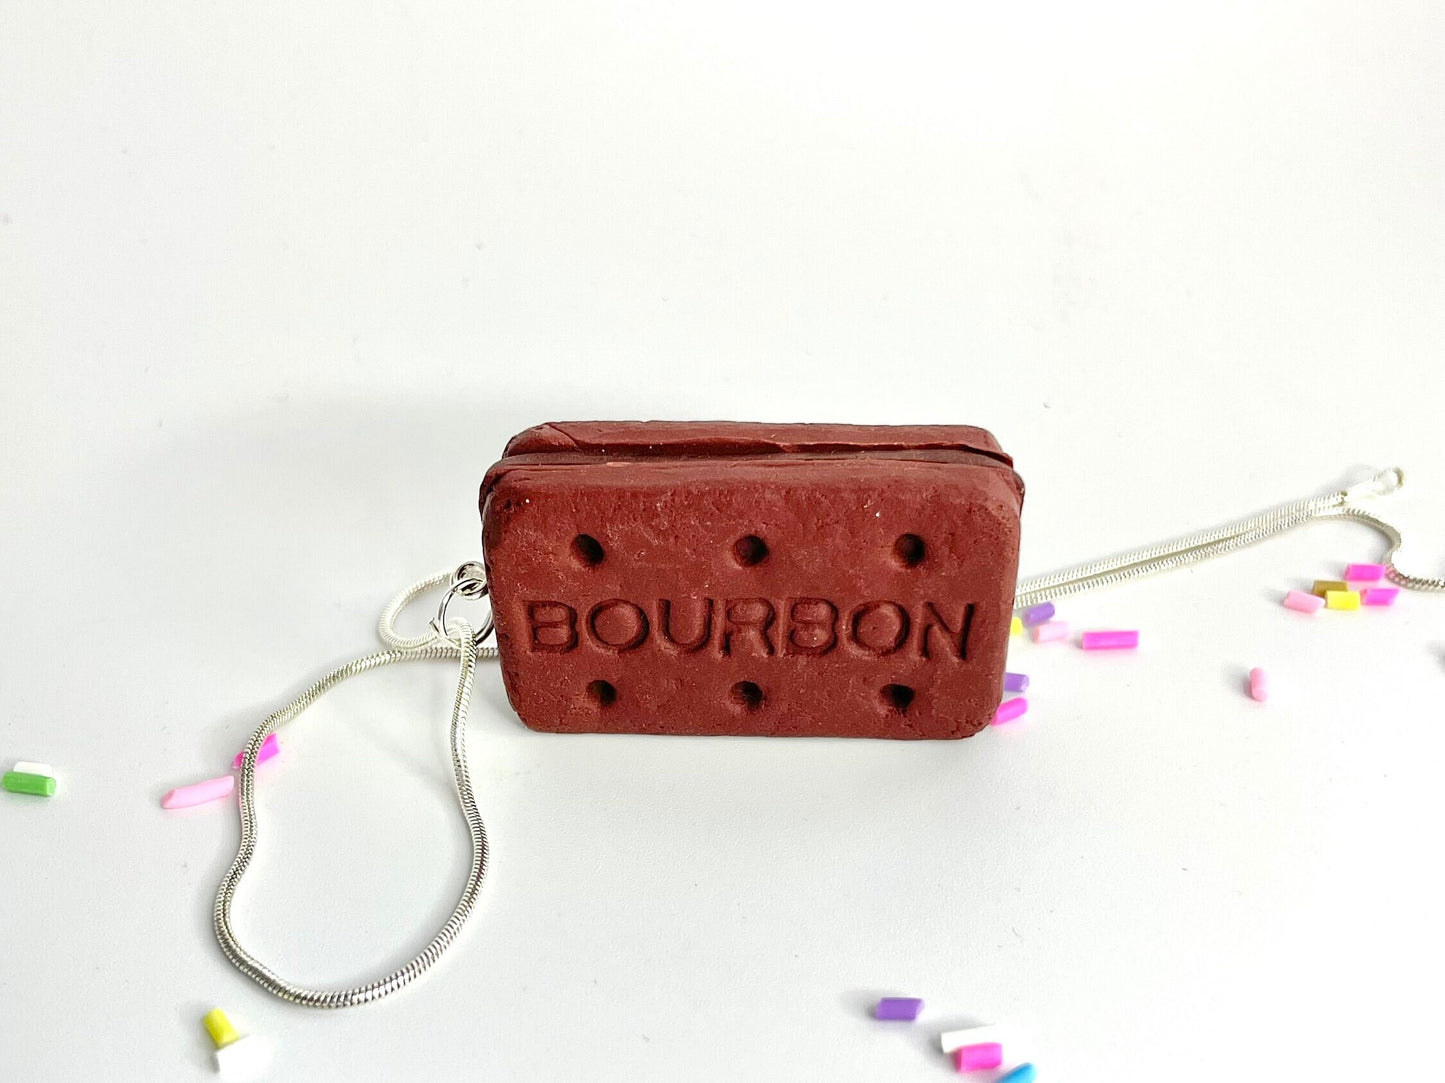 Handmade Clay Bourbon Biscuit Necklace